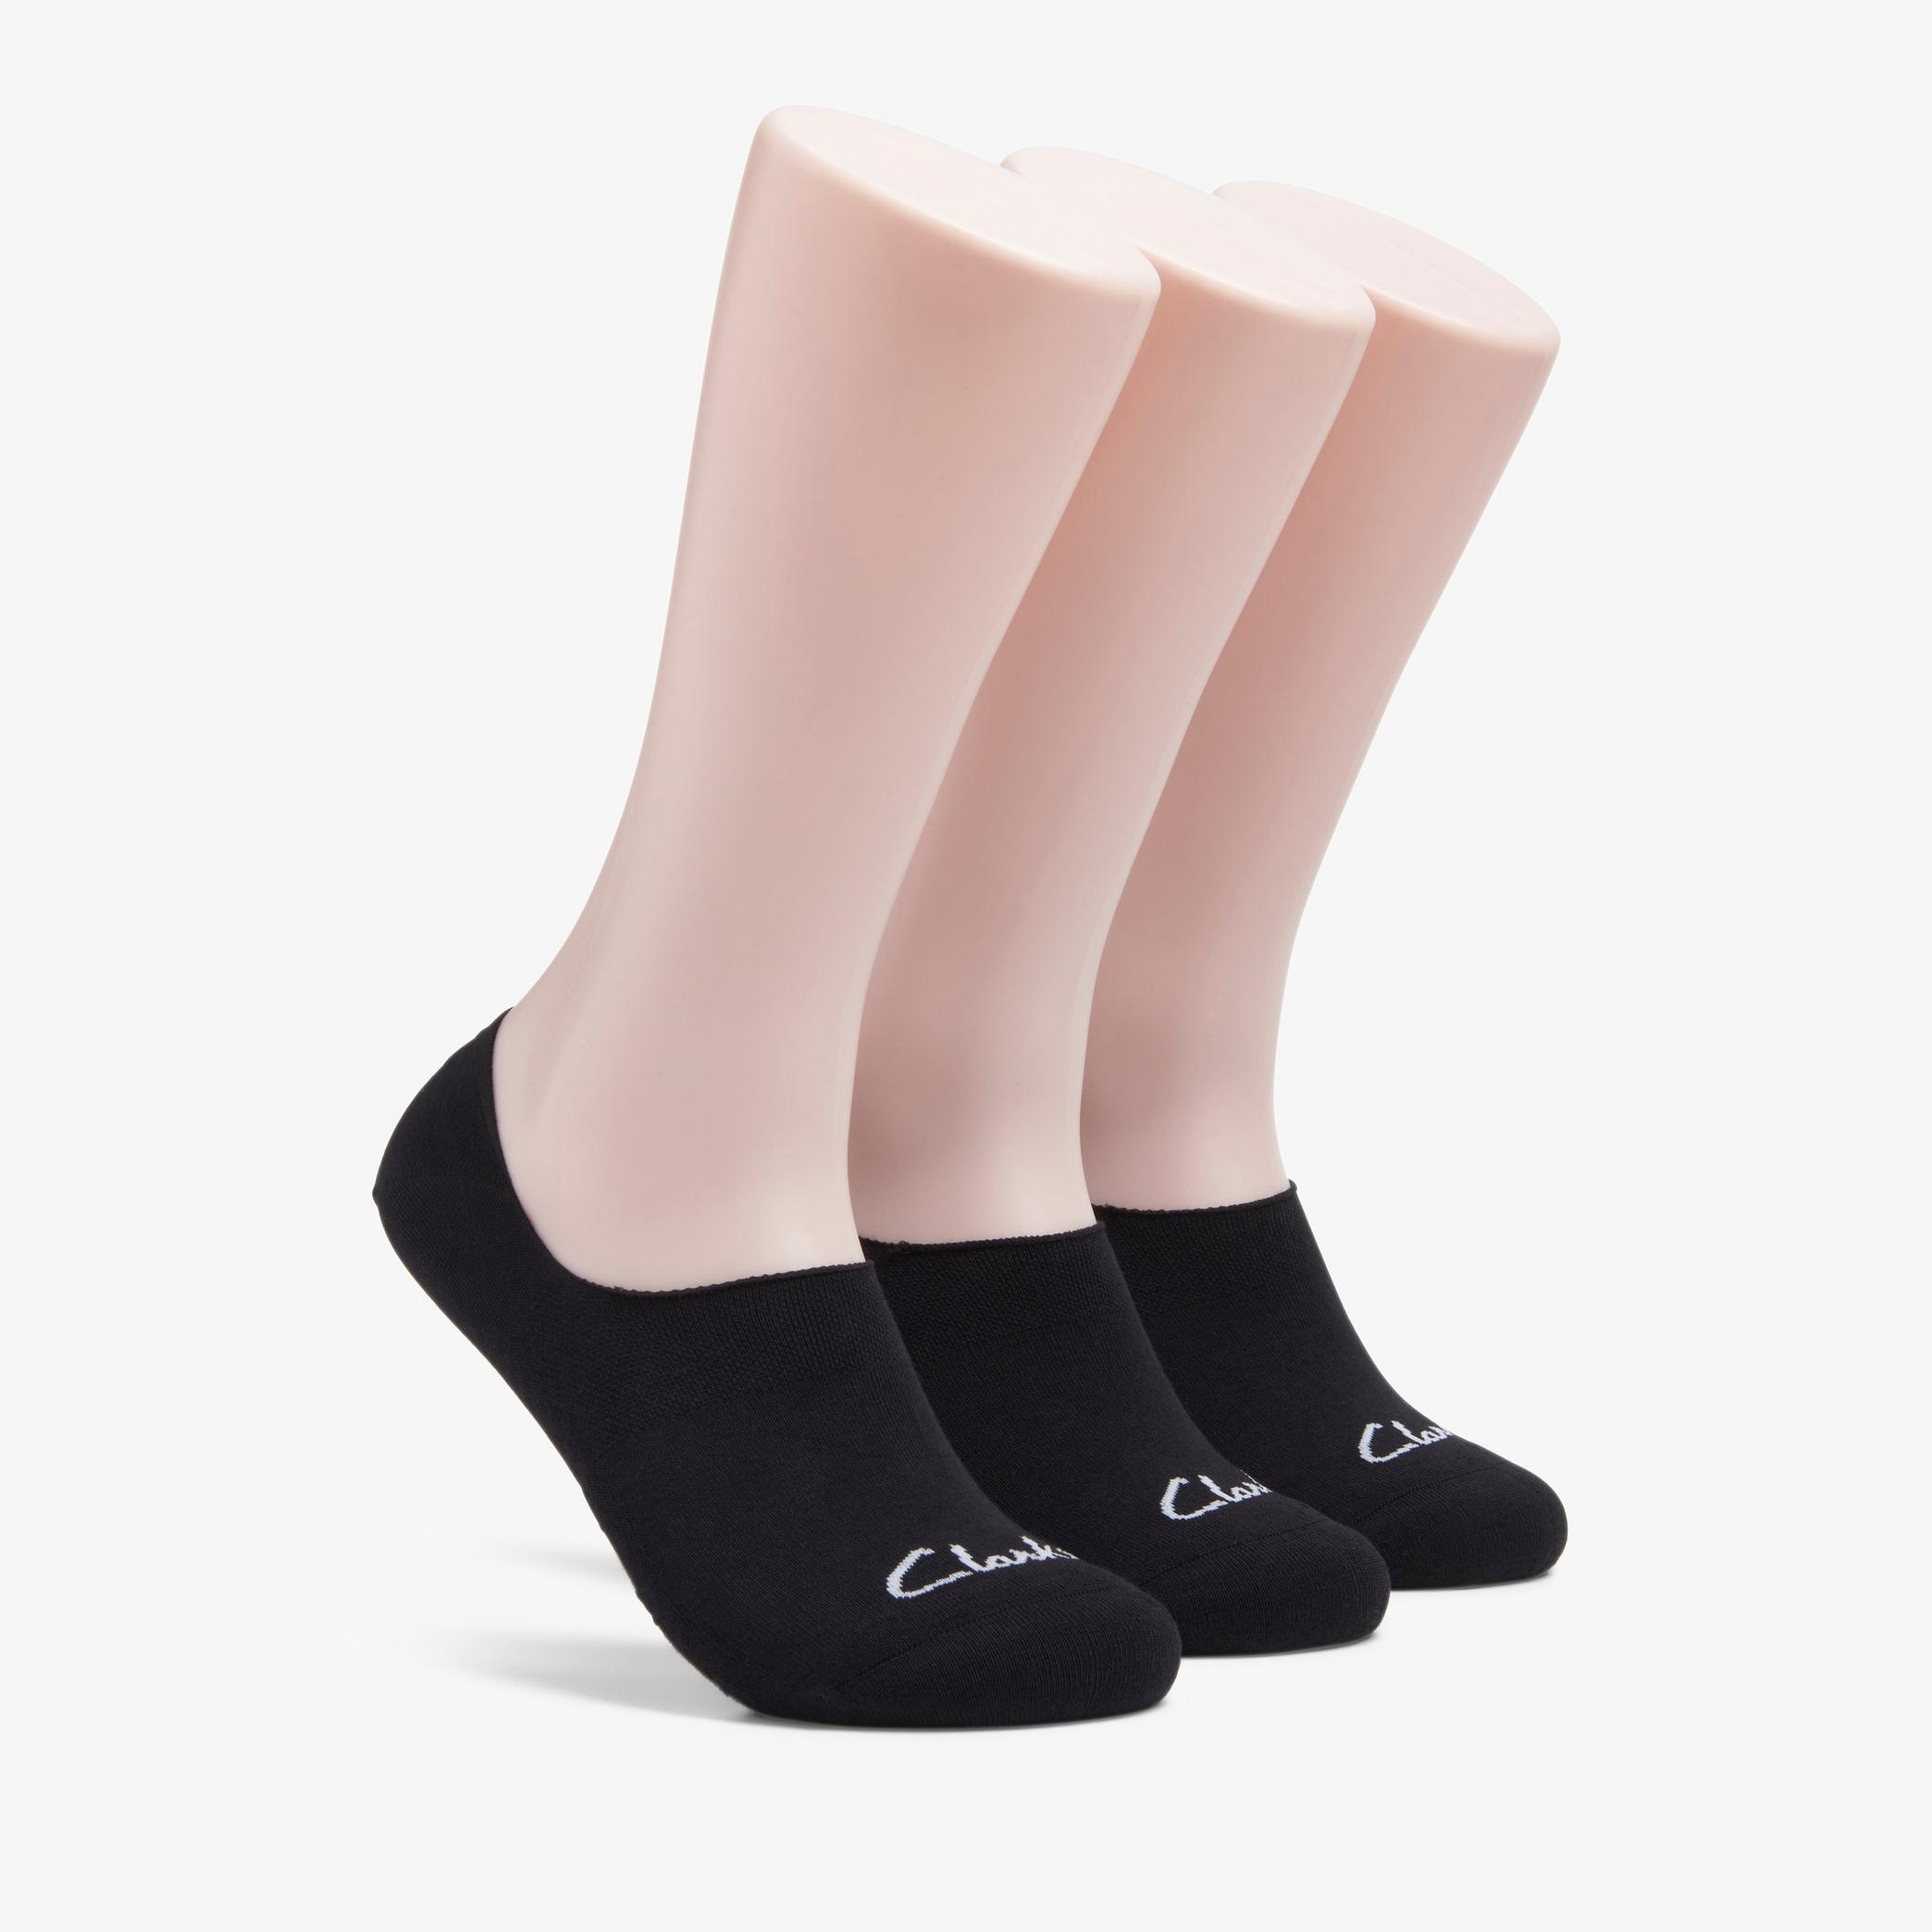 3 pack Solid Liner Black Socks, view 1 of 3